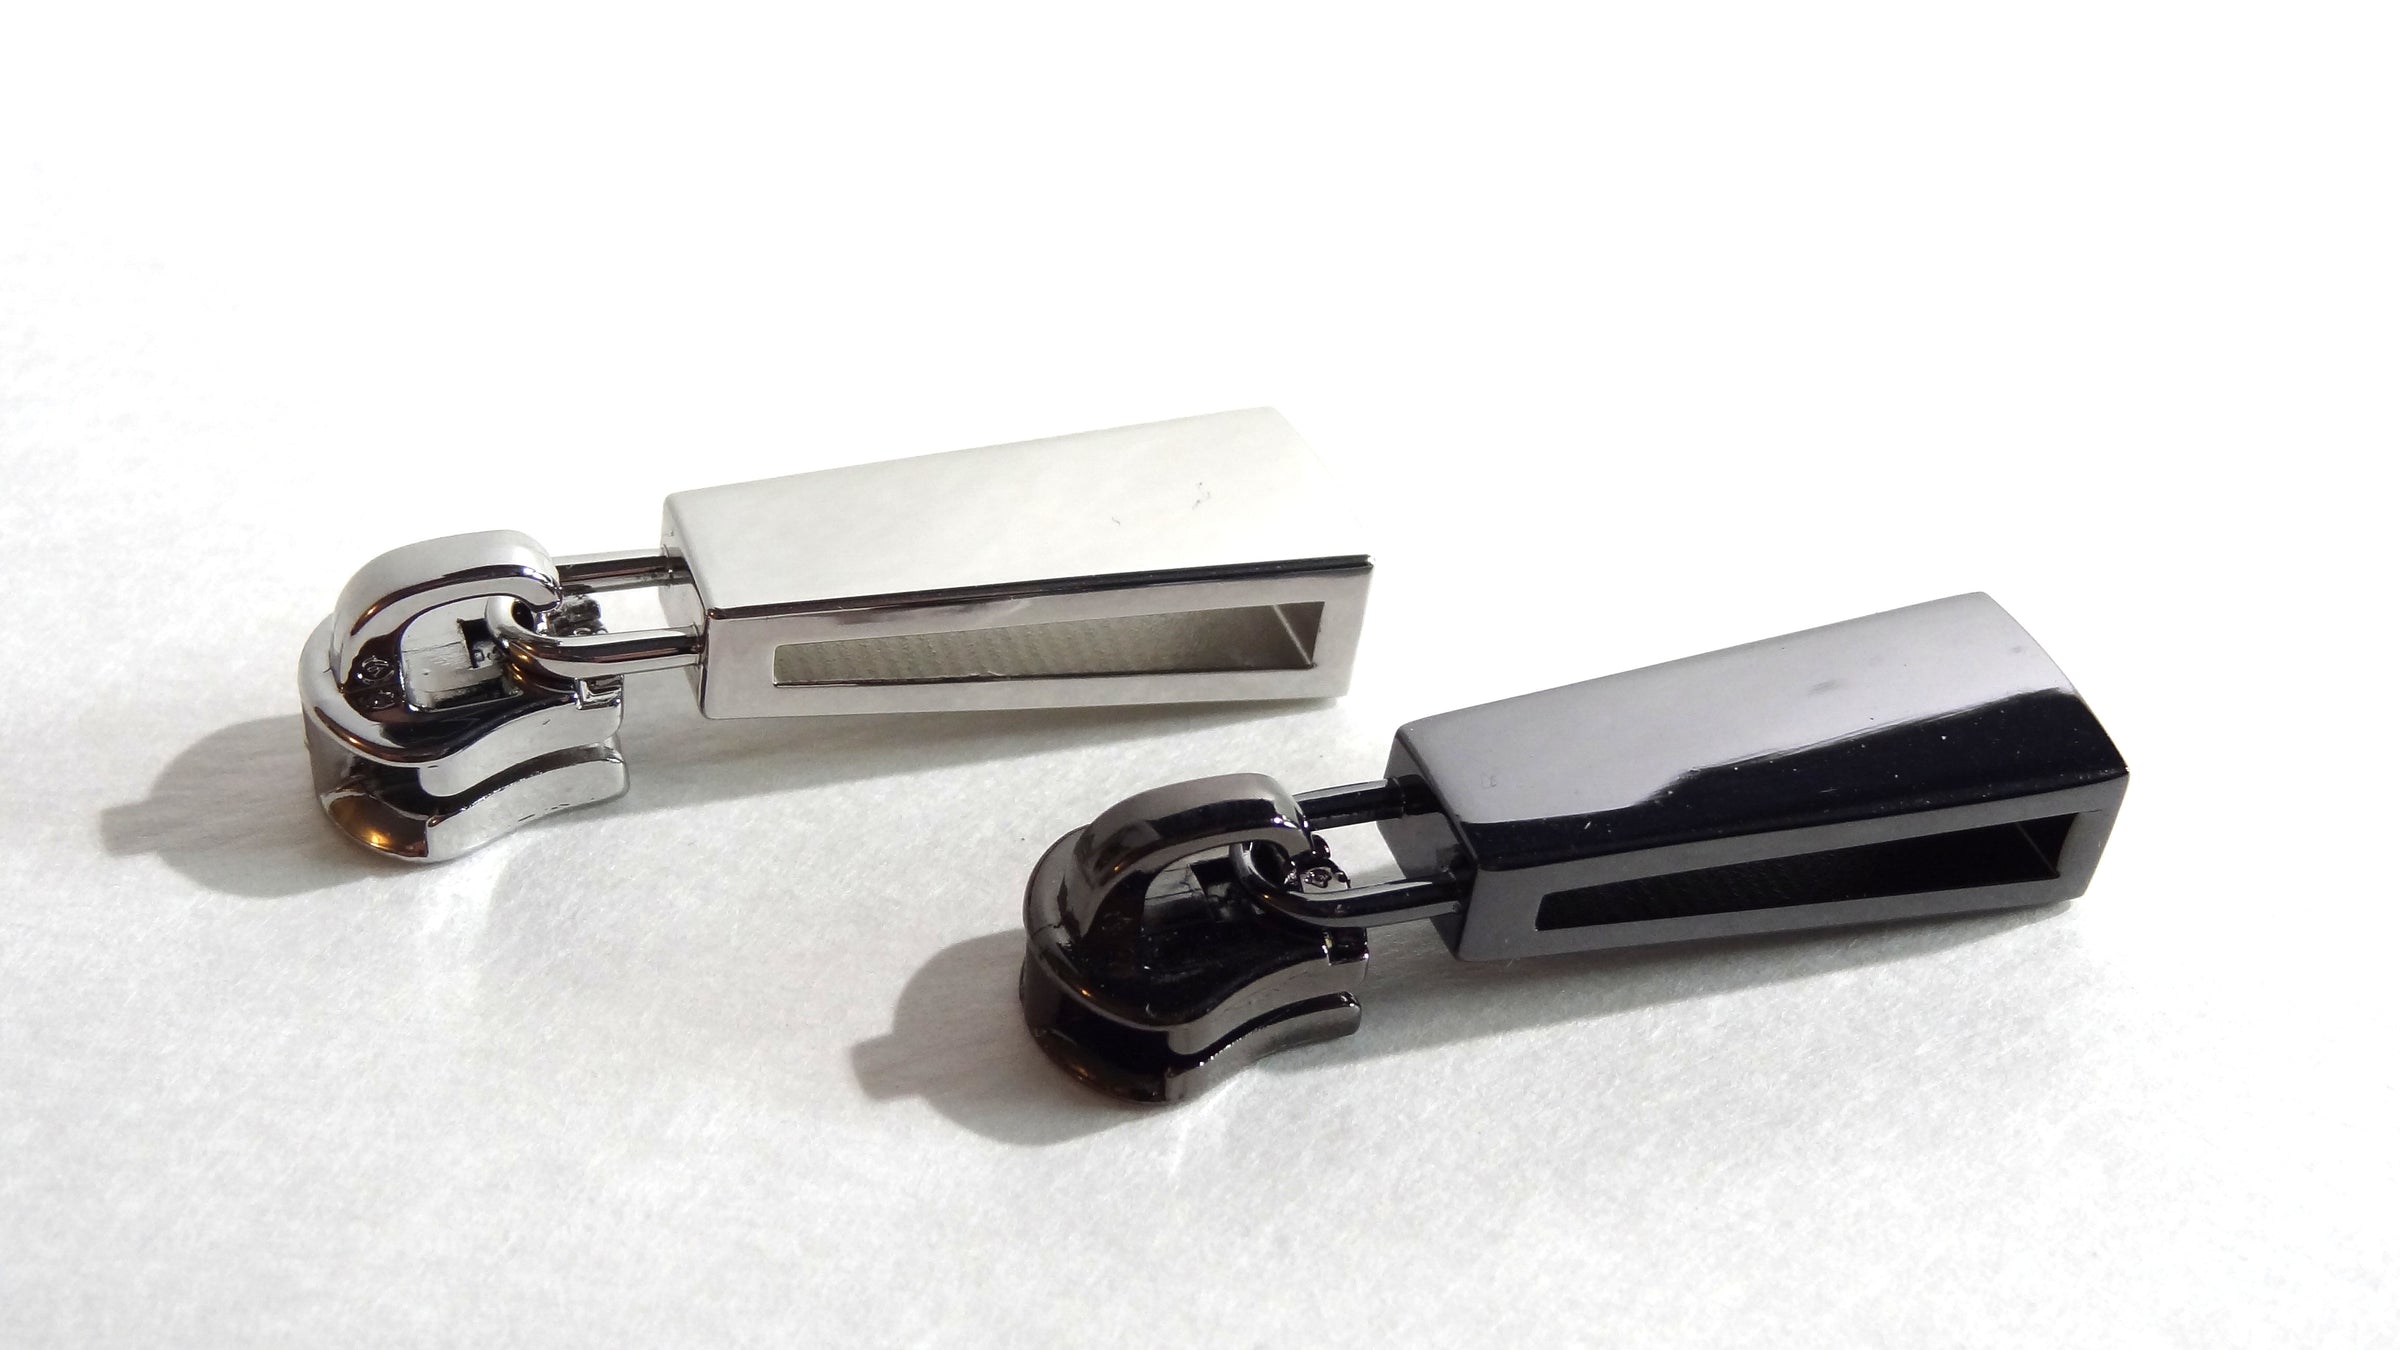 Size #5 Gunmetal Collection Kit 3, 5 yards of #5 Nylon Zipper Tape with  Gunmetal Coil & 15 Zipper Pulls, zipper tape